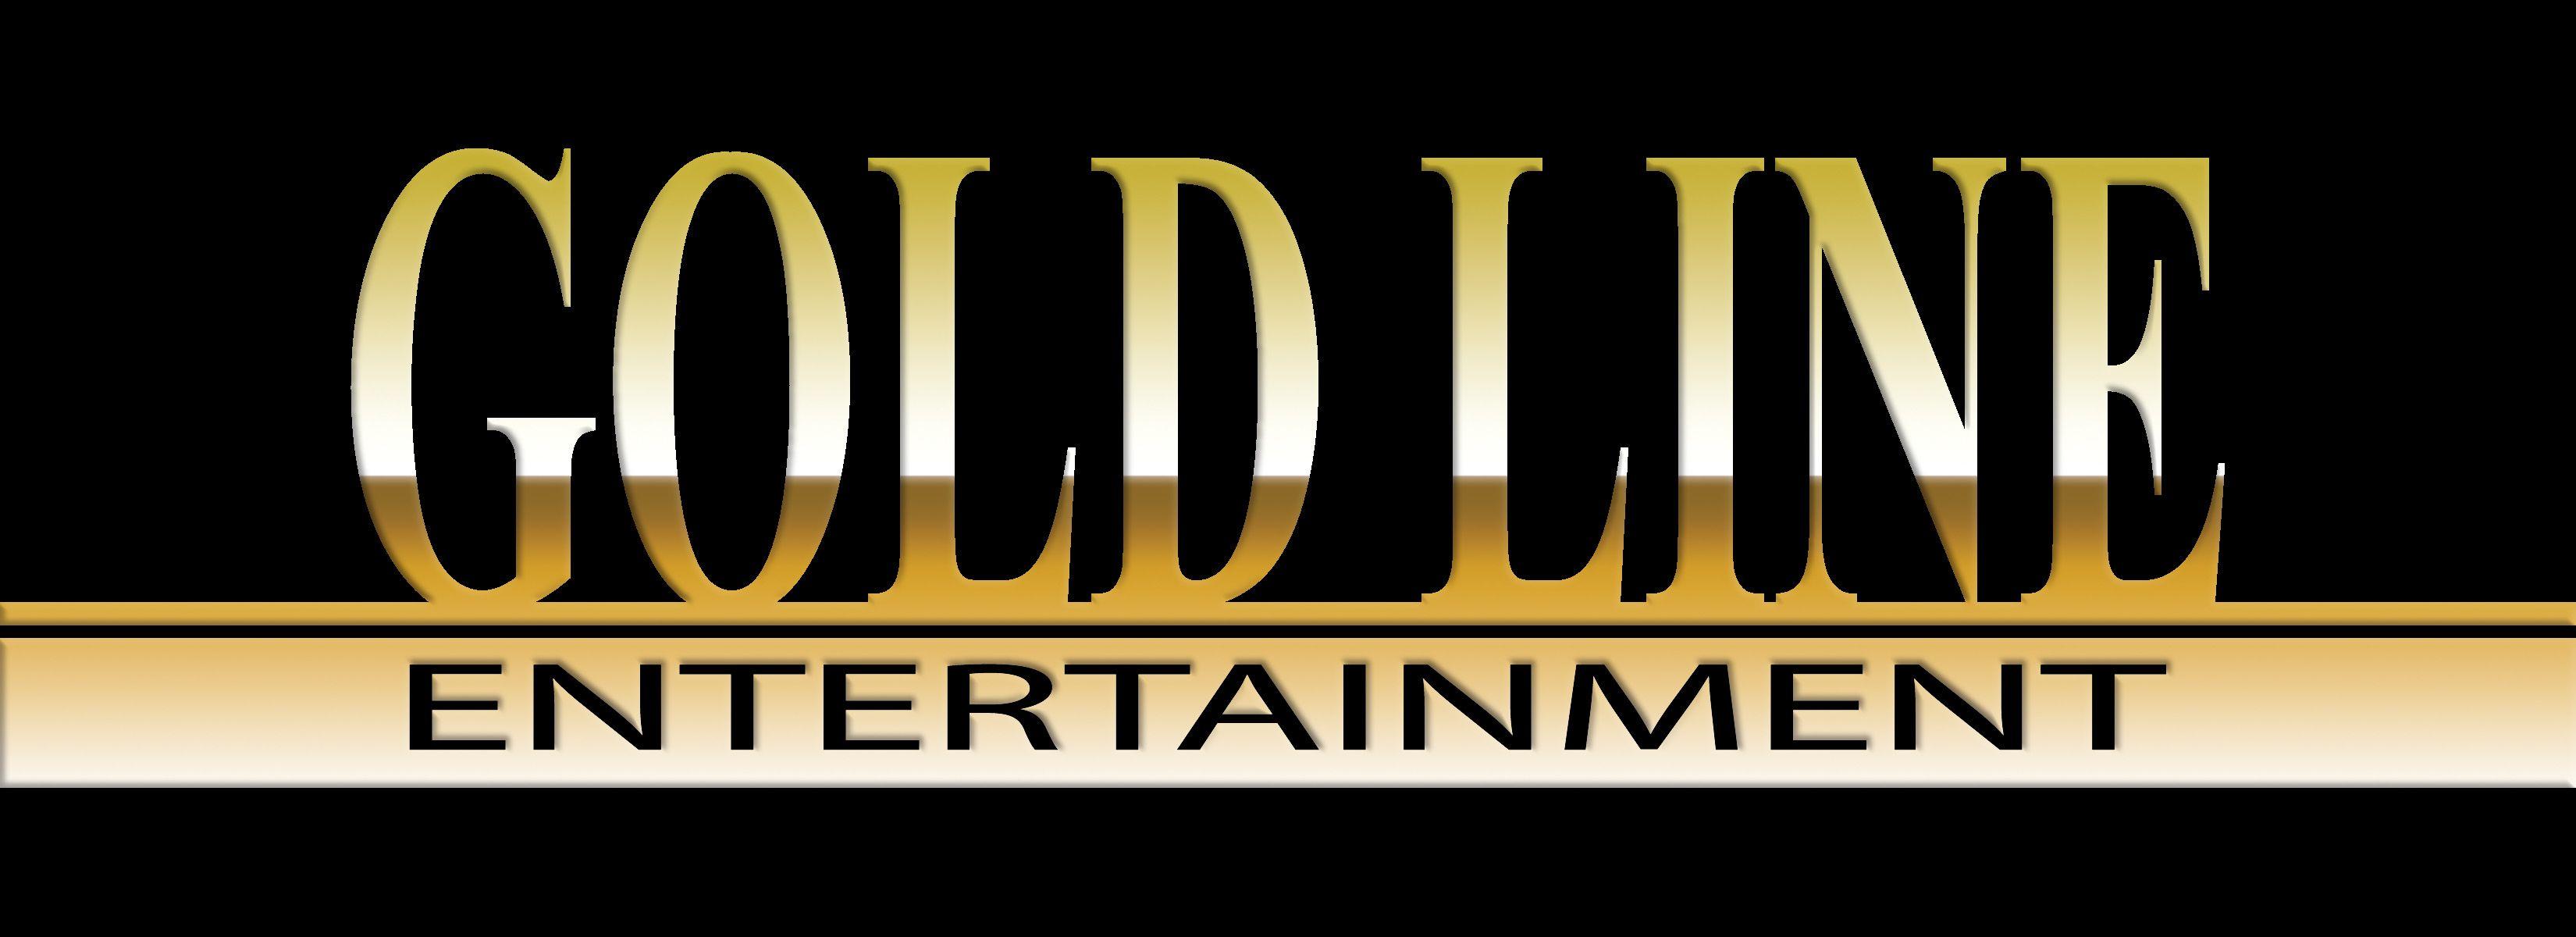 Gold Entertainment Logo - LOGO DESIGN: Gold Line Entertainment | JonathanRoberts.co